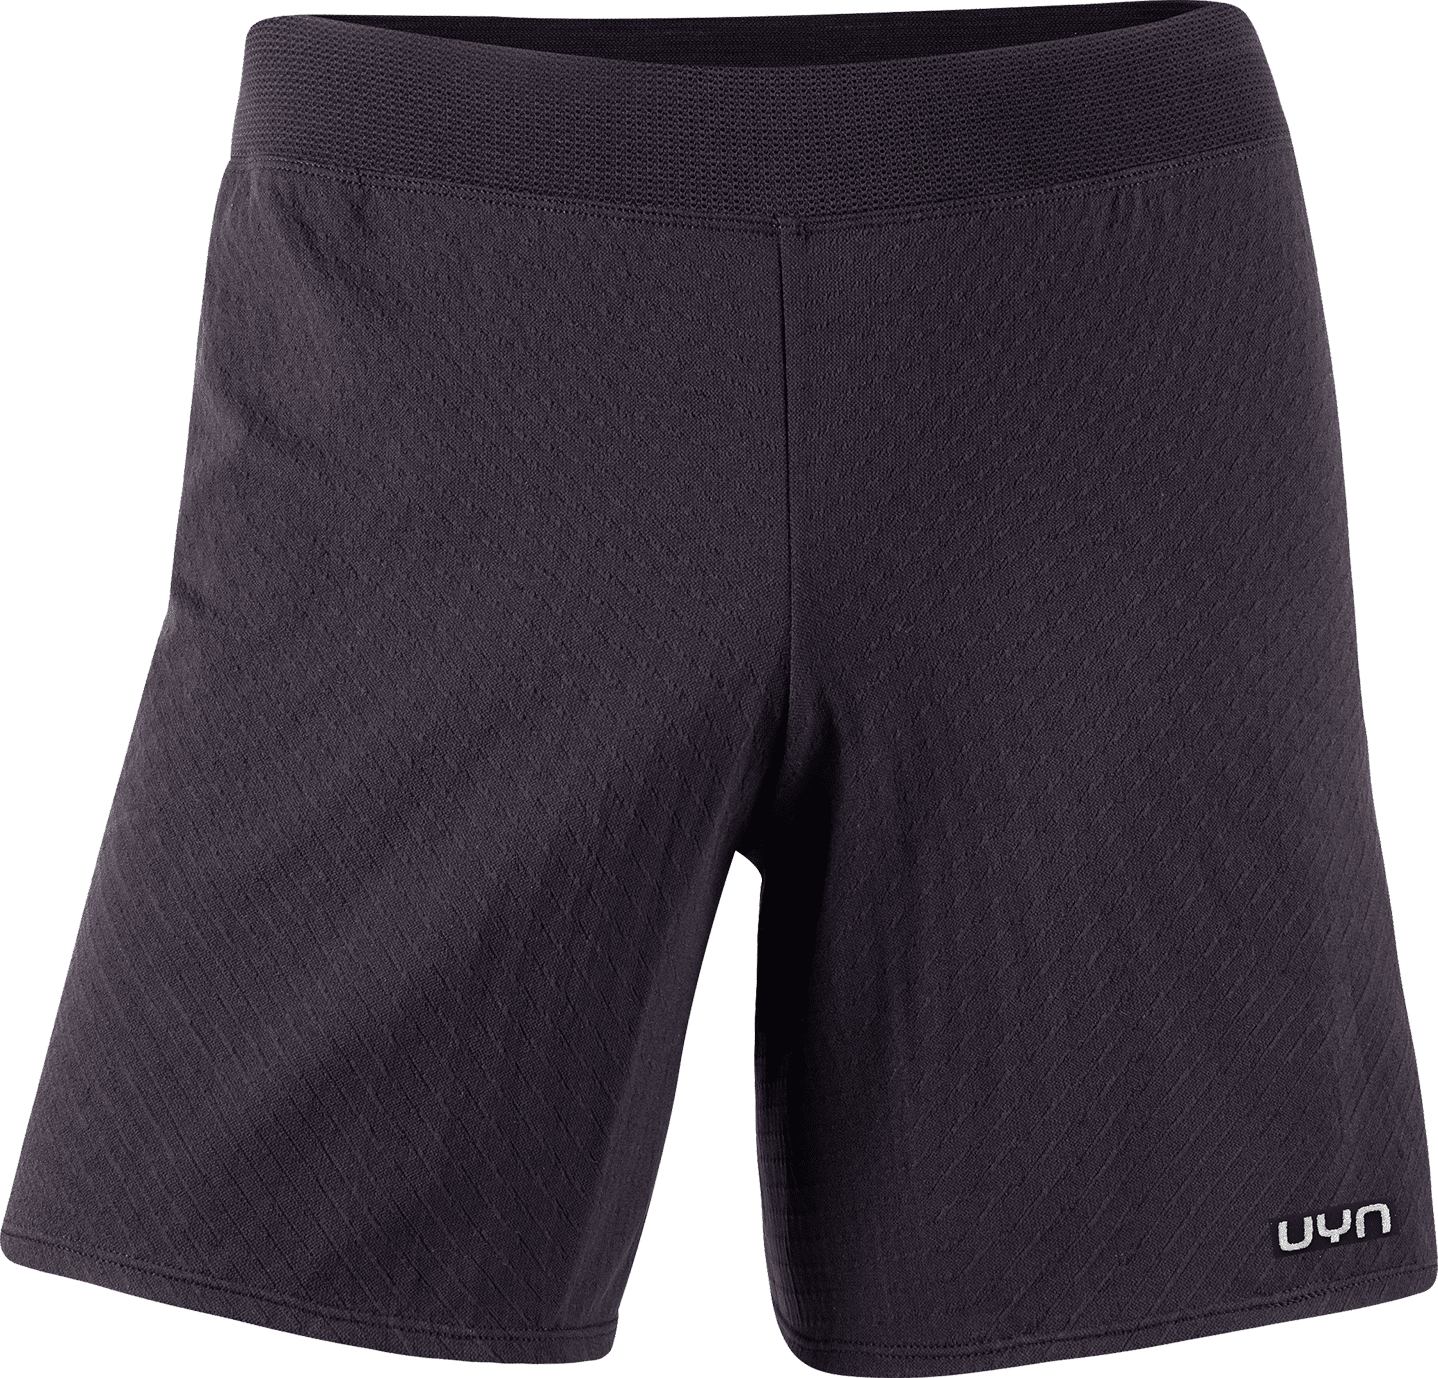 Uyn Marathon - Pantalones cortos de running - Hombre